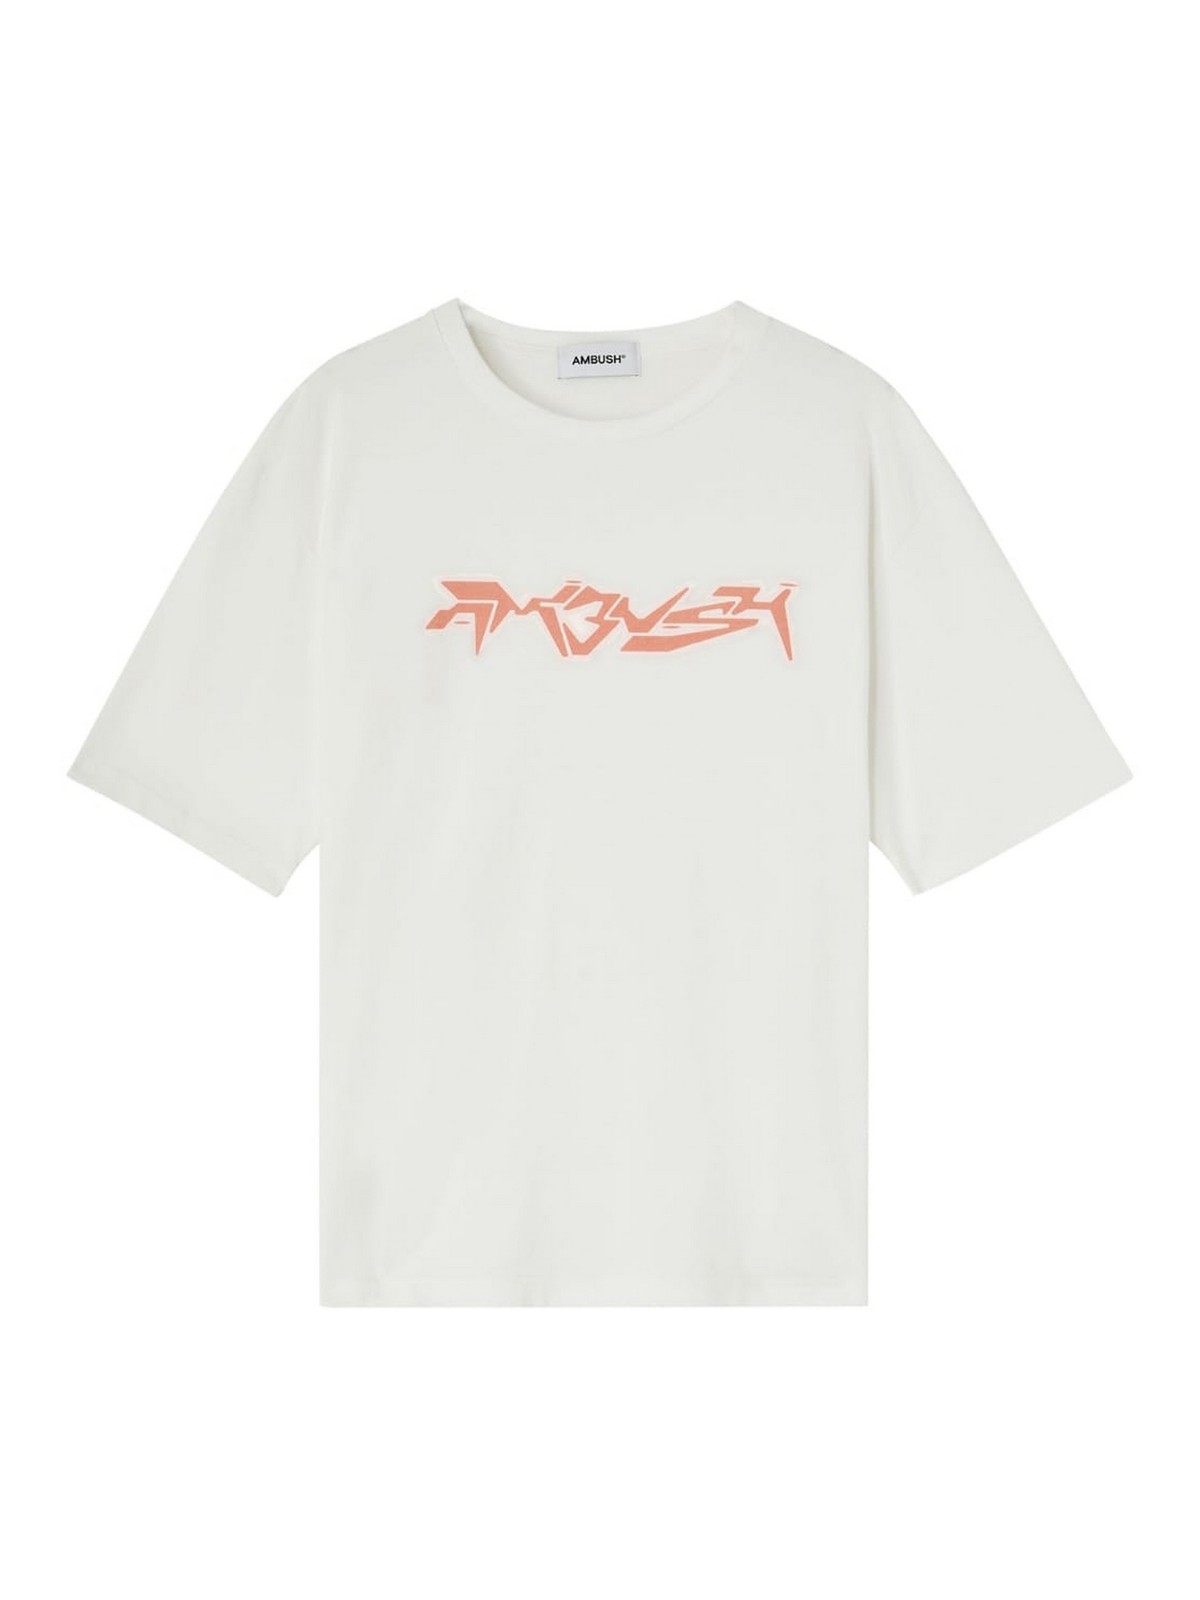 Ambush Cotton Neon Graphic T-shirt In White